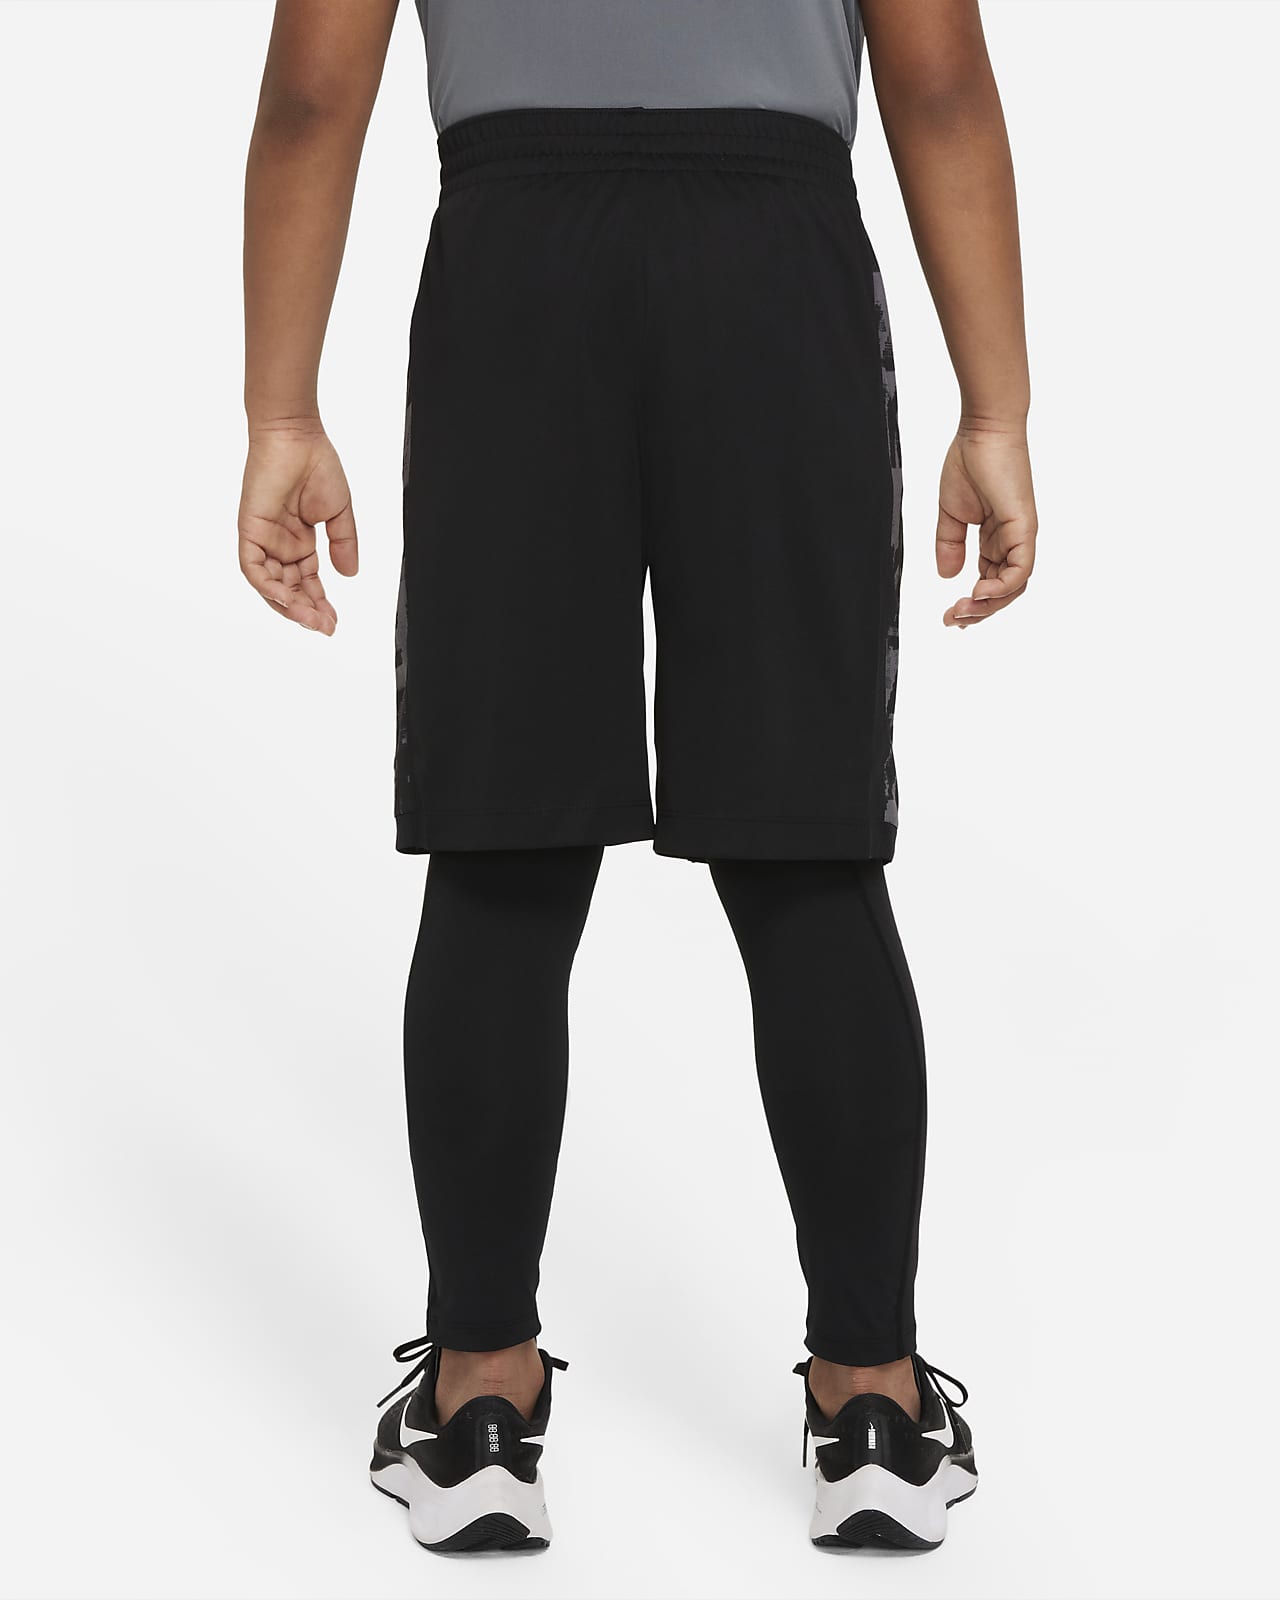 Nike Pro Hyperwarm Tights AOP - Cool Grey/Black Kids